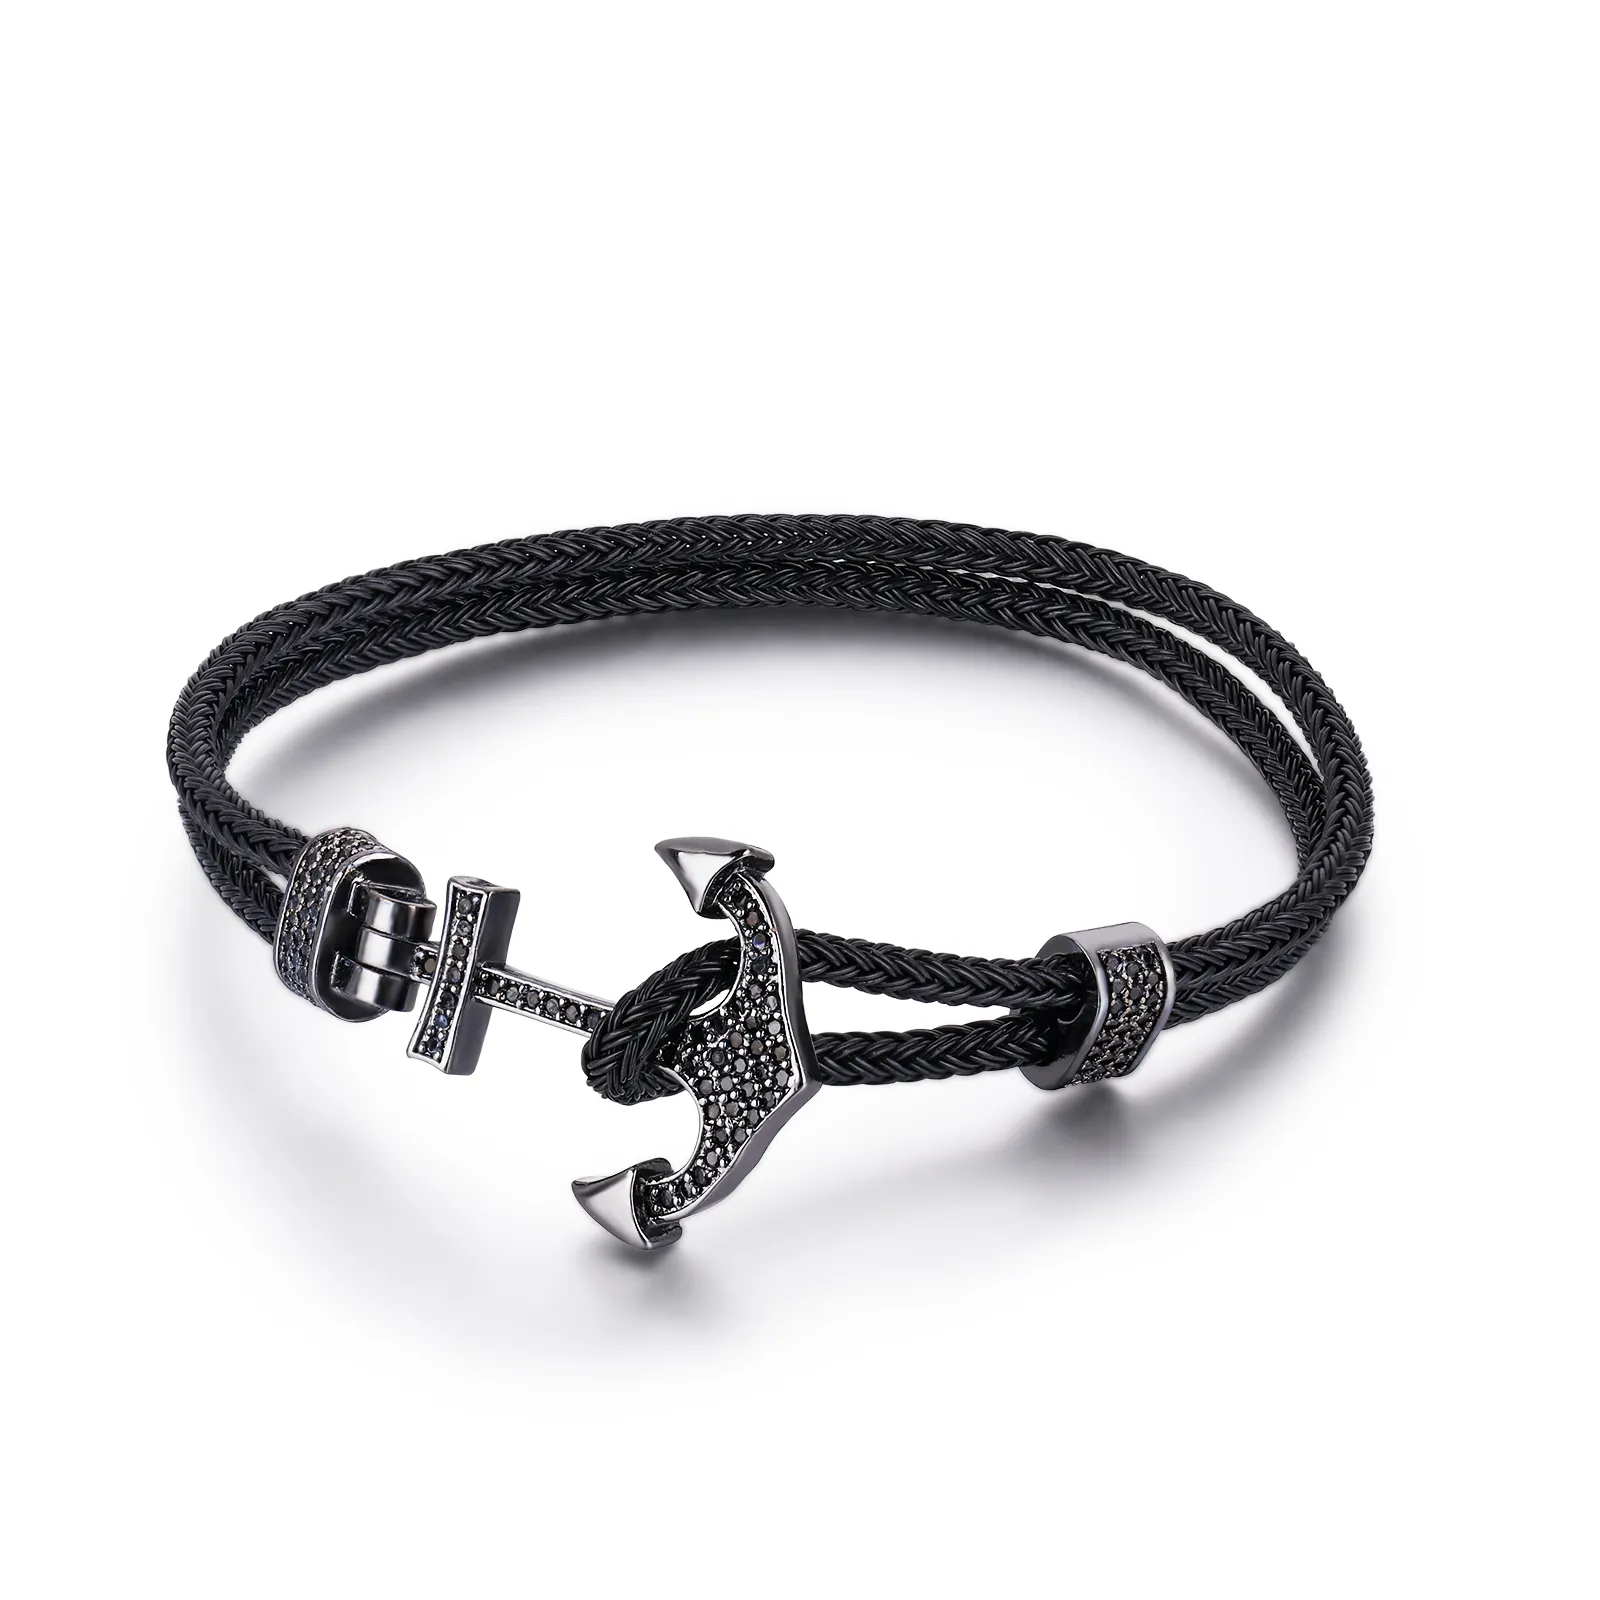 Fashion Adjustable Rhinestone Charm Bangle Bracelet Clasp With Metal Charm Wide Blanks Band Gents Leather Bangle Anchor Bracelet